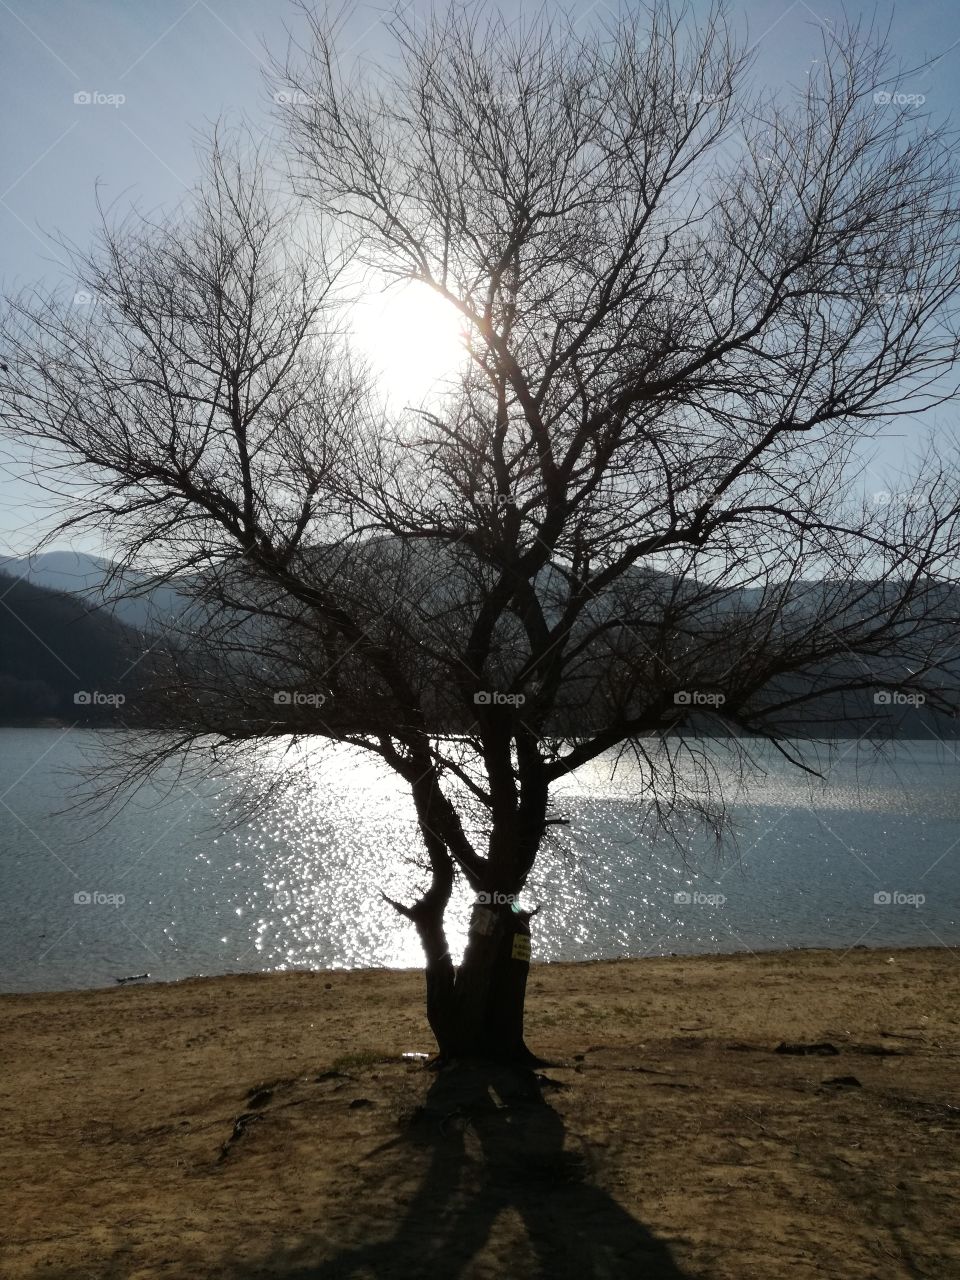 A tree, like a guard of the lake